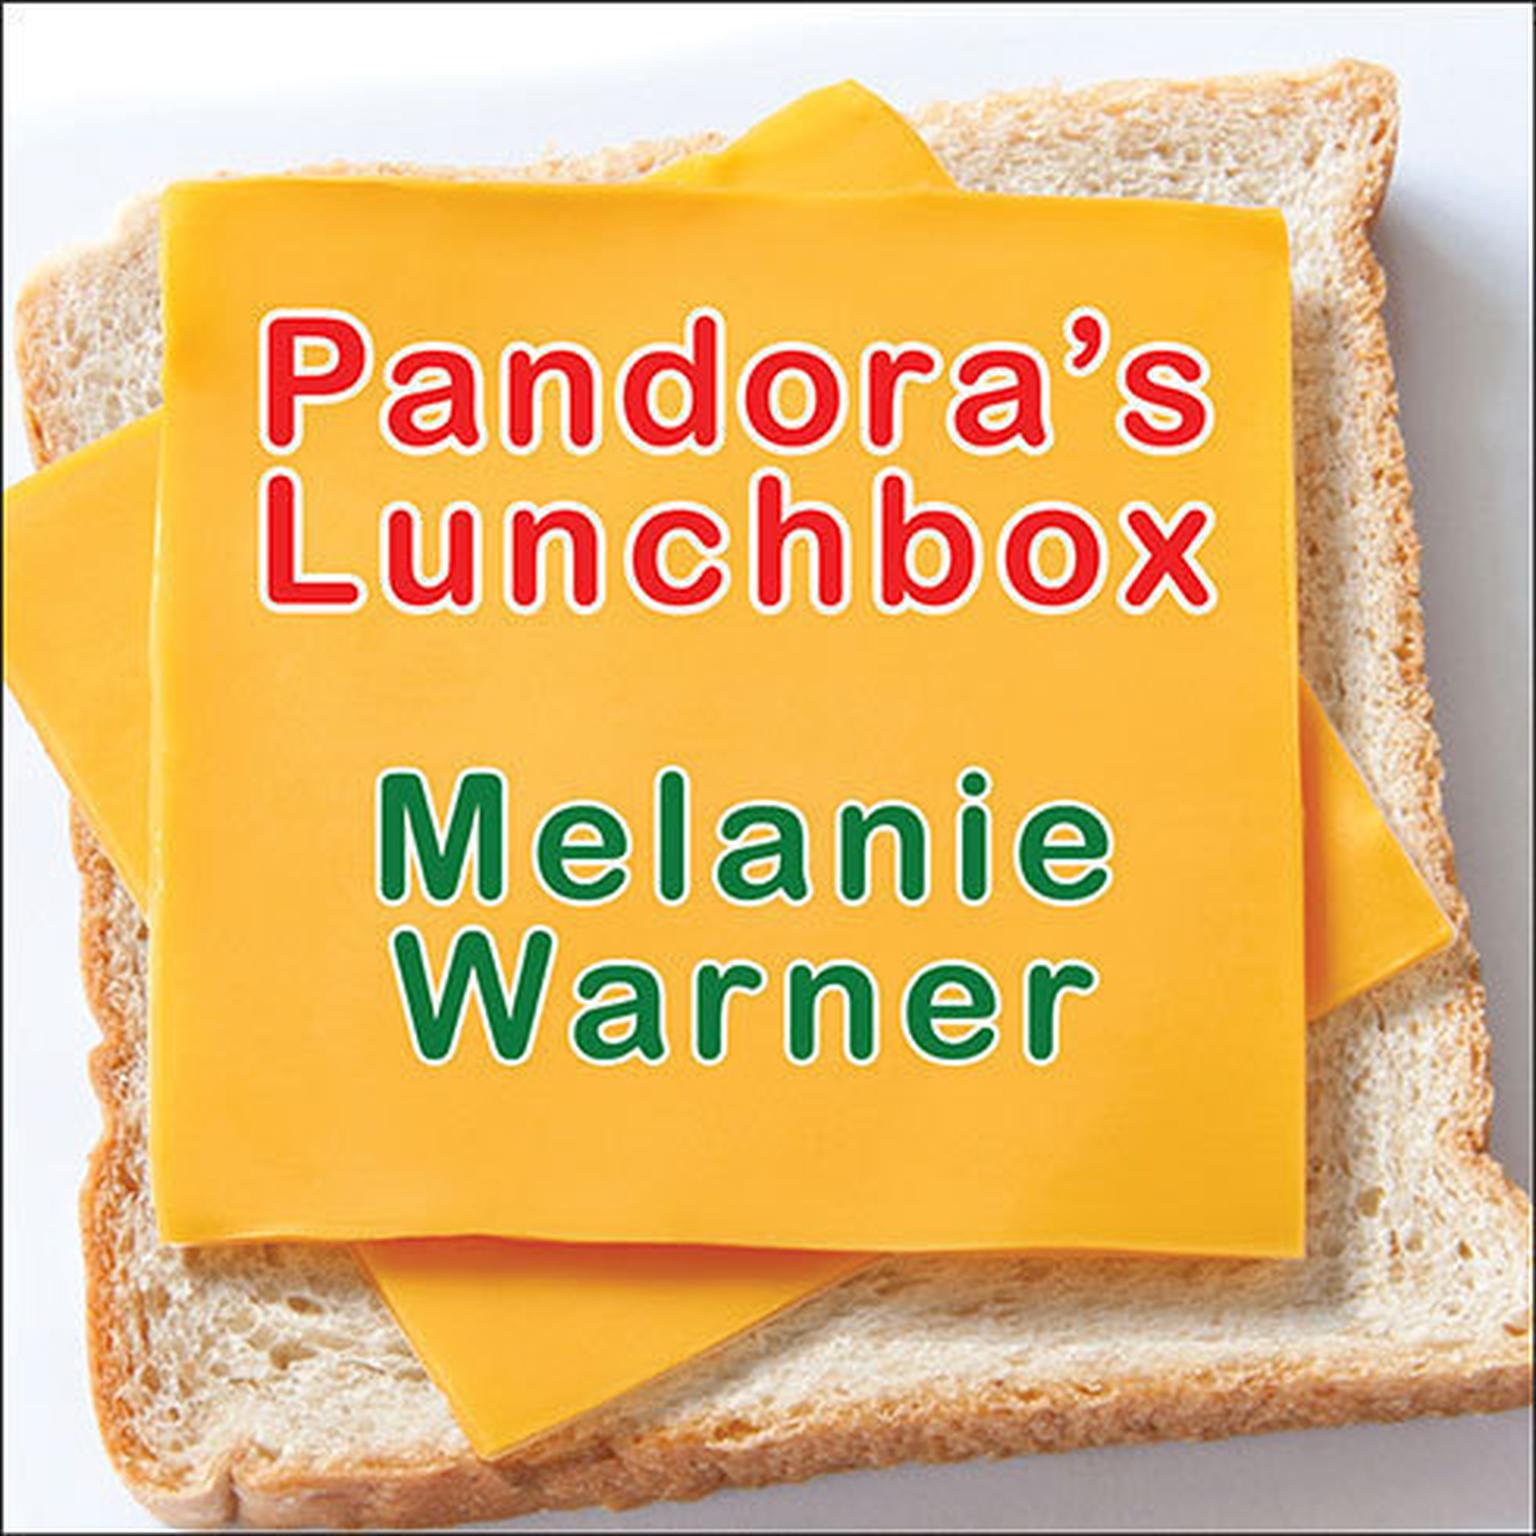 Pandoras Lunchbox: How Processed Food Took Over the American Meal Audiobook, by Melanie Warner